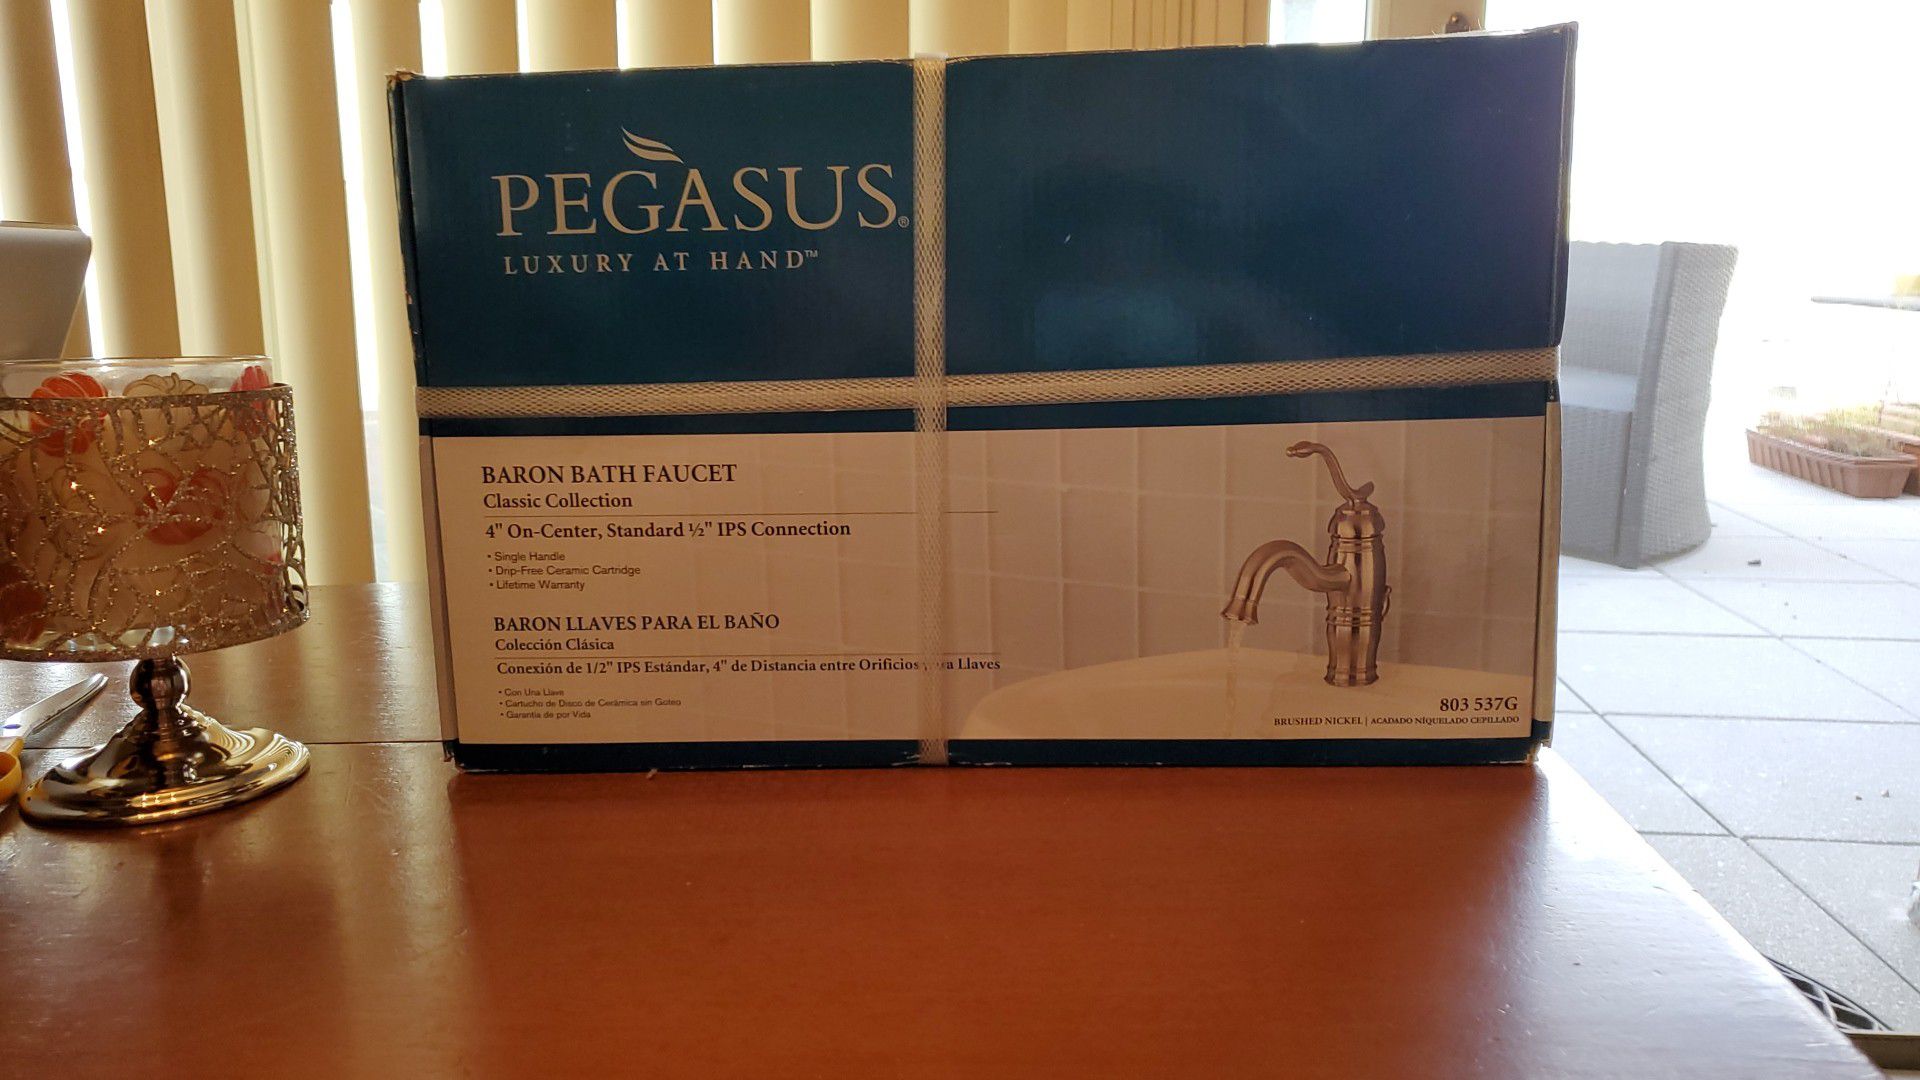 Pegasus Bathroom Sink Faucet